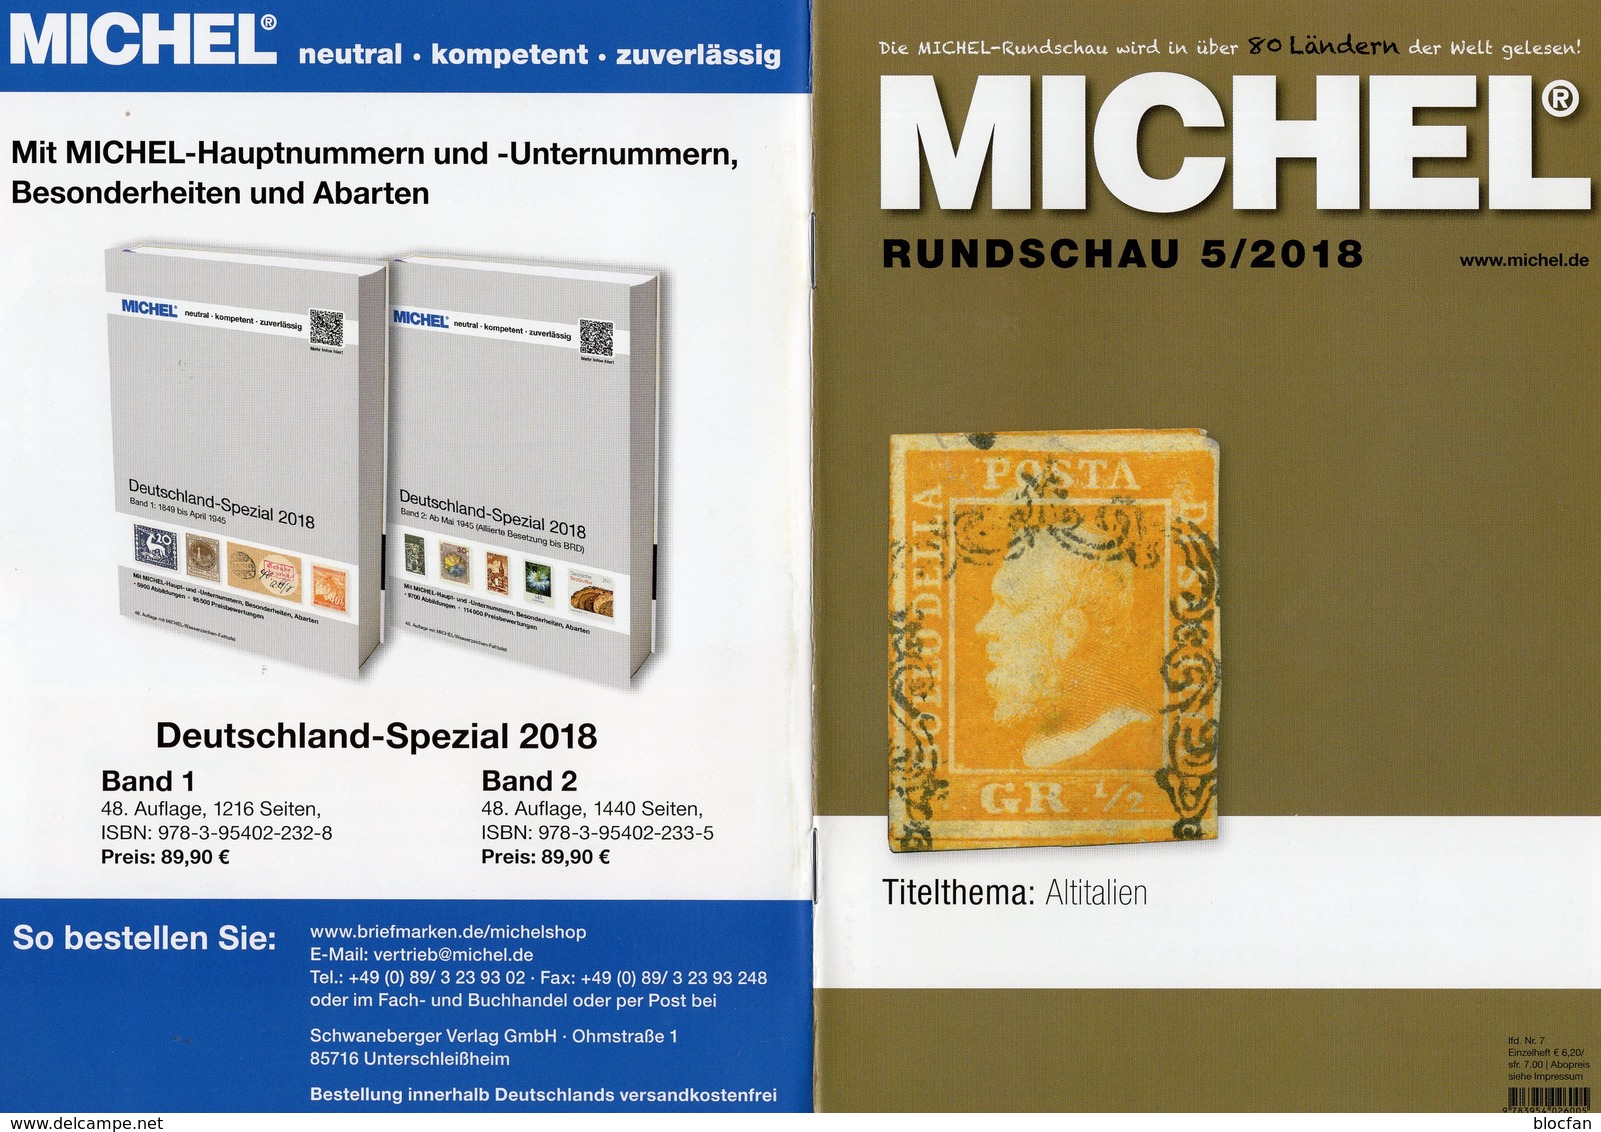 MICHEL Briefmarken Rundschau 5/2018 neu 6€ stamps of the world catalogue/magacine of Germany ISBN 978-3-95402-600-5